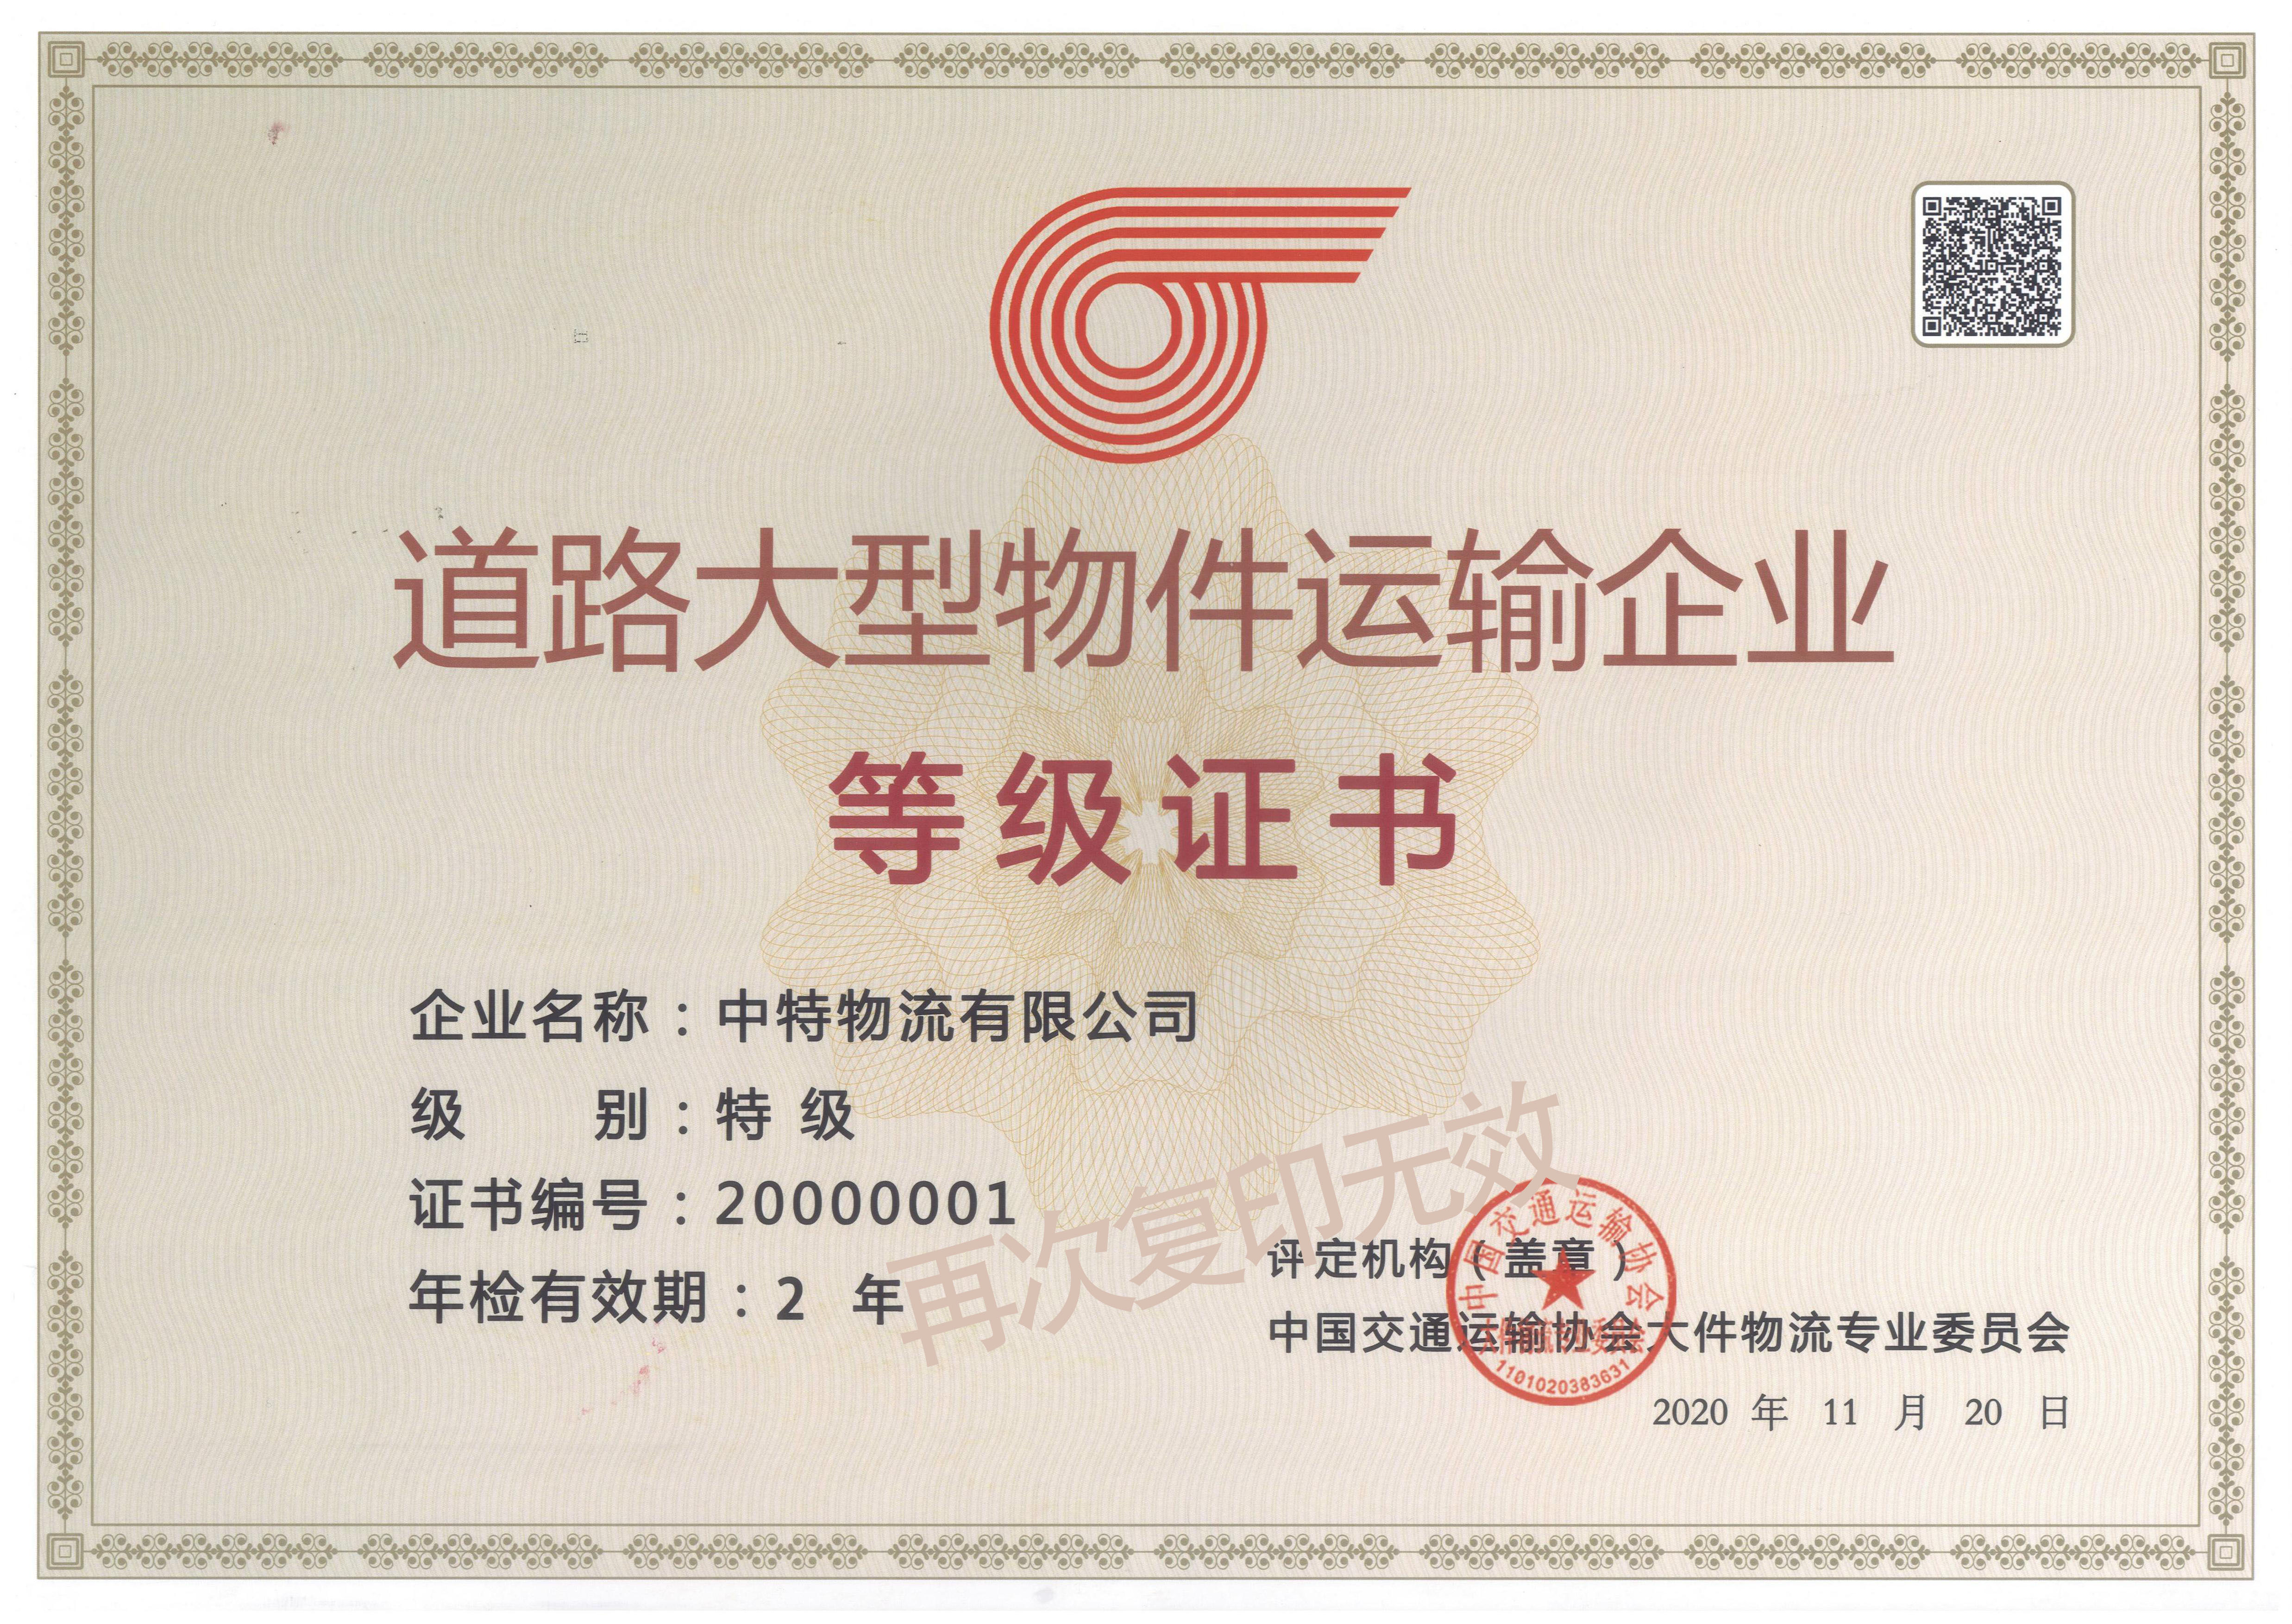 Road large object transportation enterprise level certificate